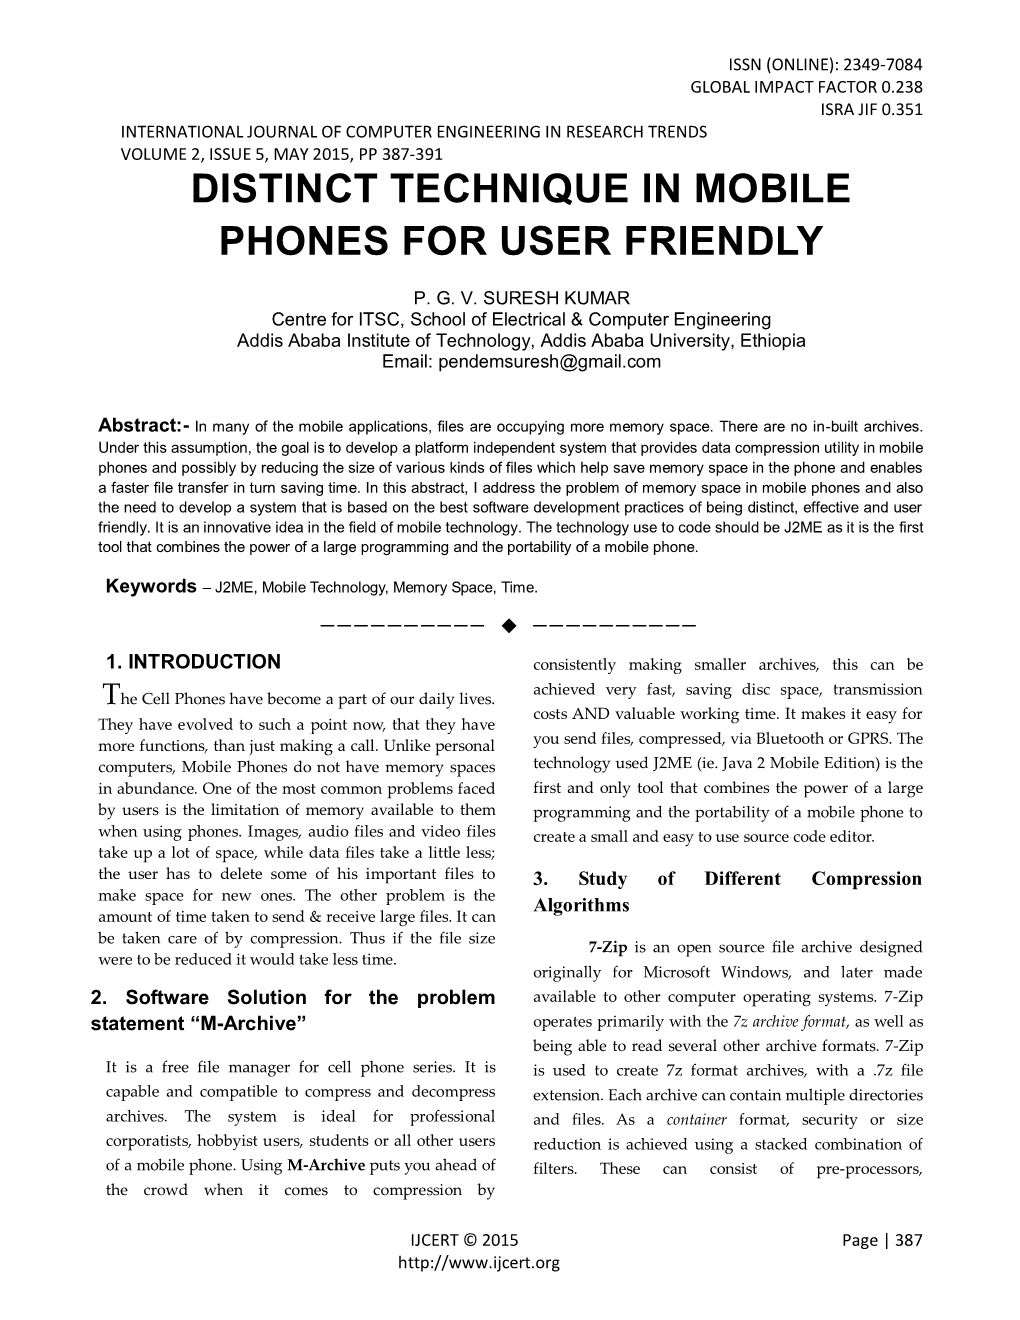 Distinct Technique in Mobile Phones for User Friendly